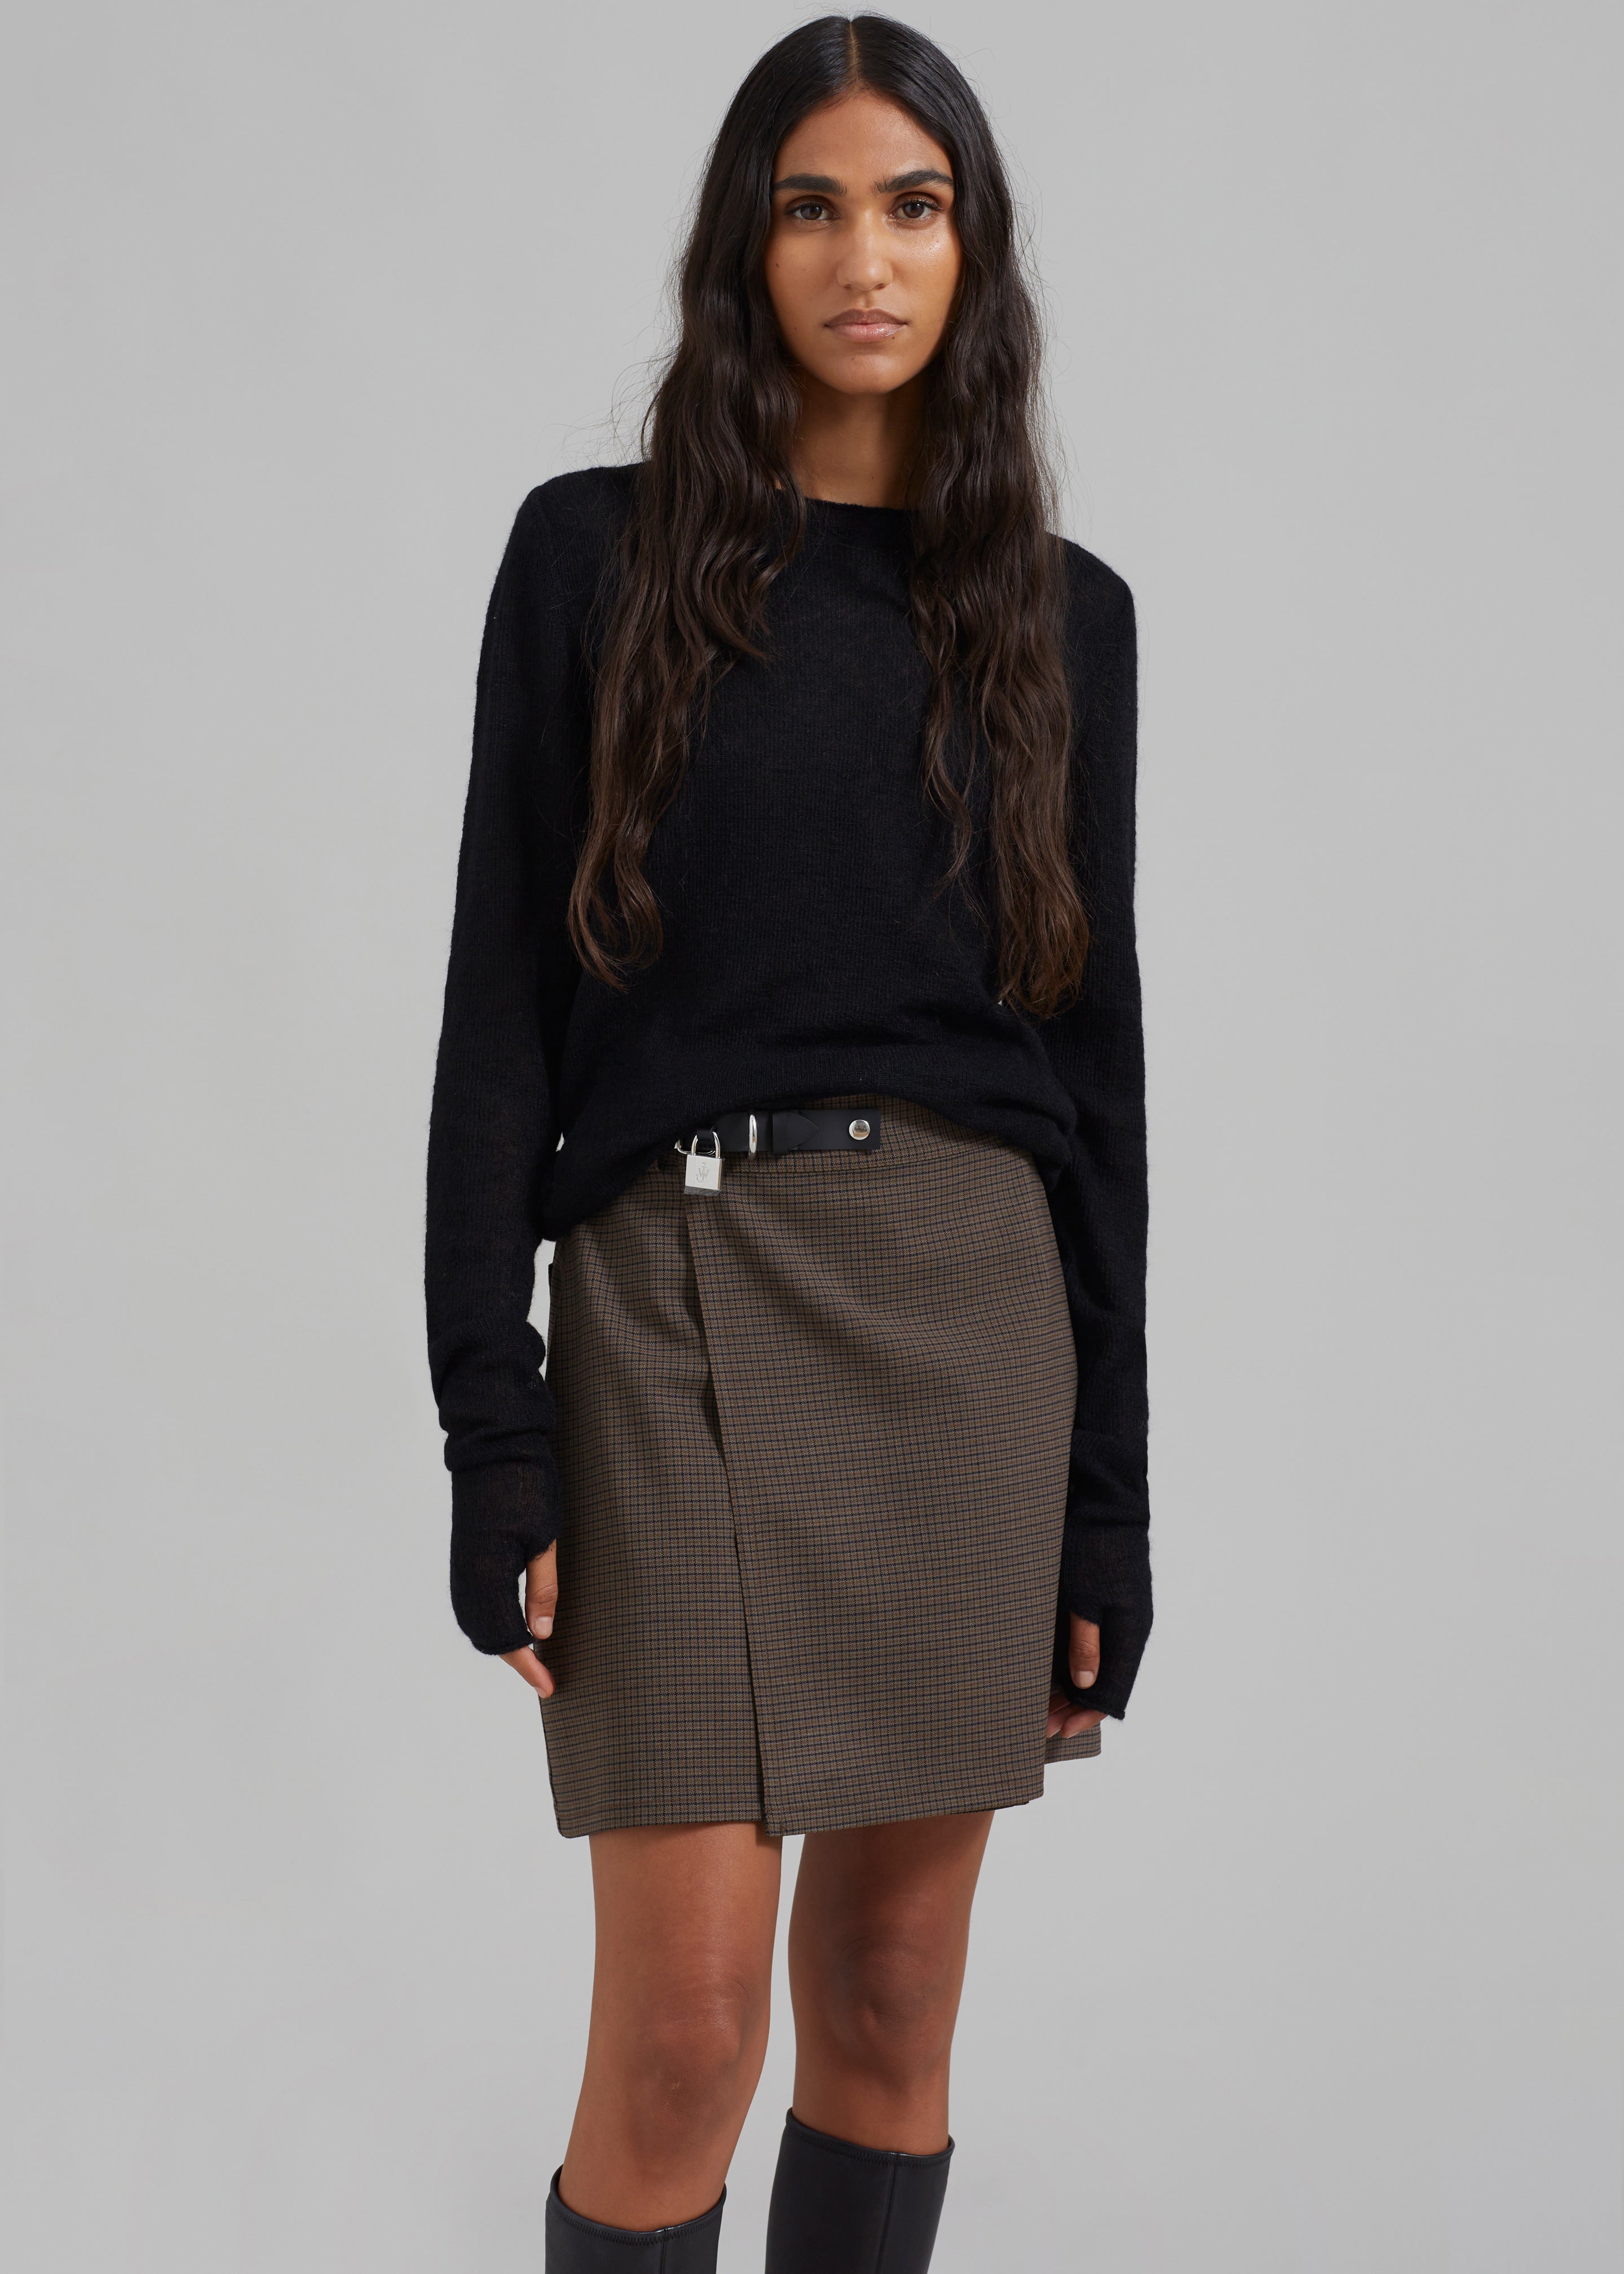 JW Anderson Padlock Strap Mini Skirt - Brown Sugar Comb | The Frankie Shop